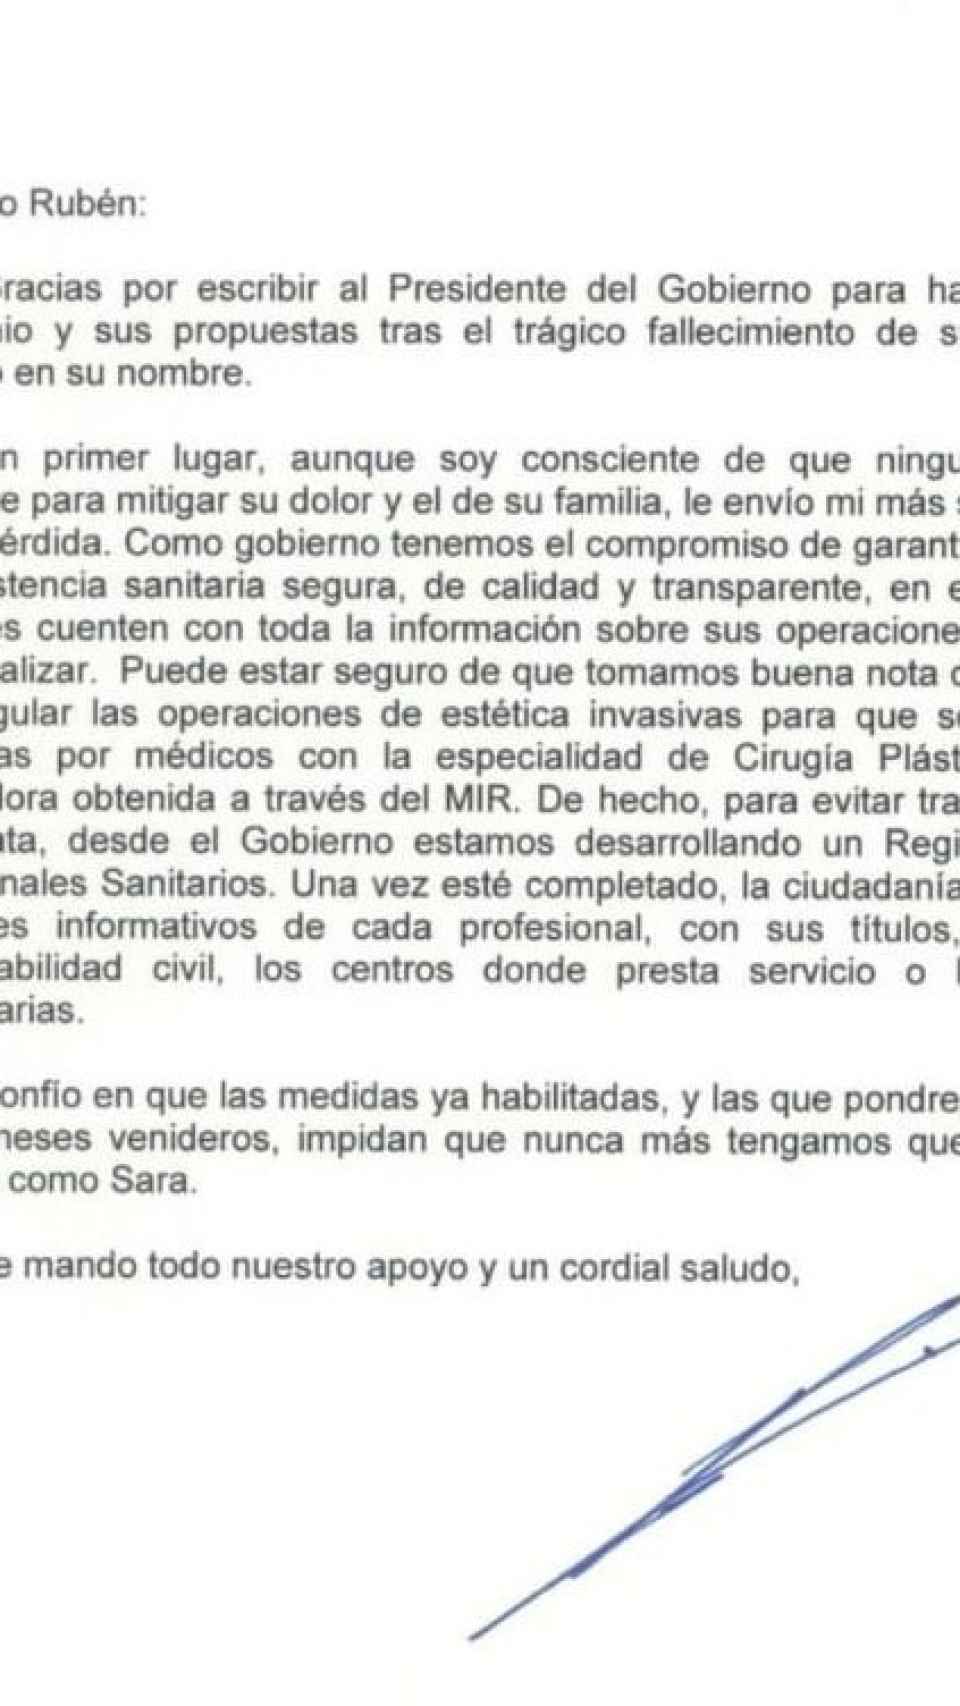 La carta de la Moncloa enviada a Rubén, el hermano de Sara Gómez.